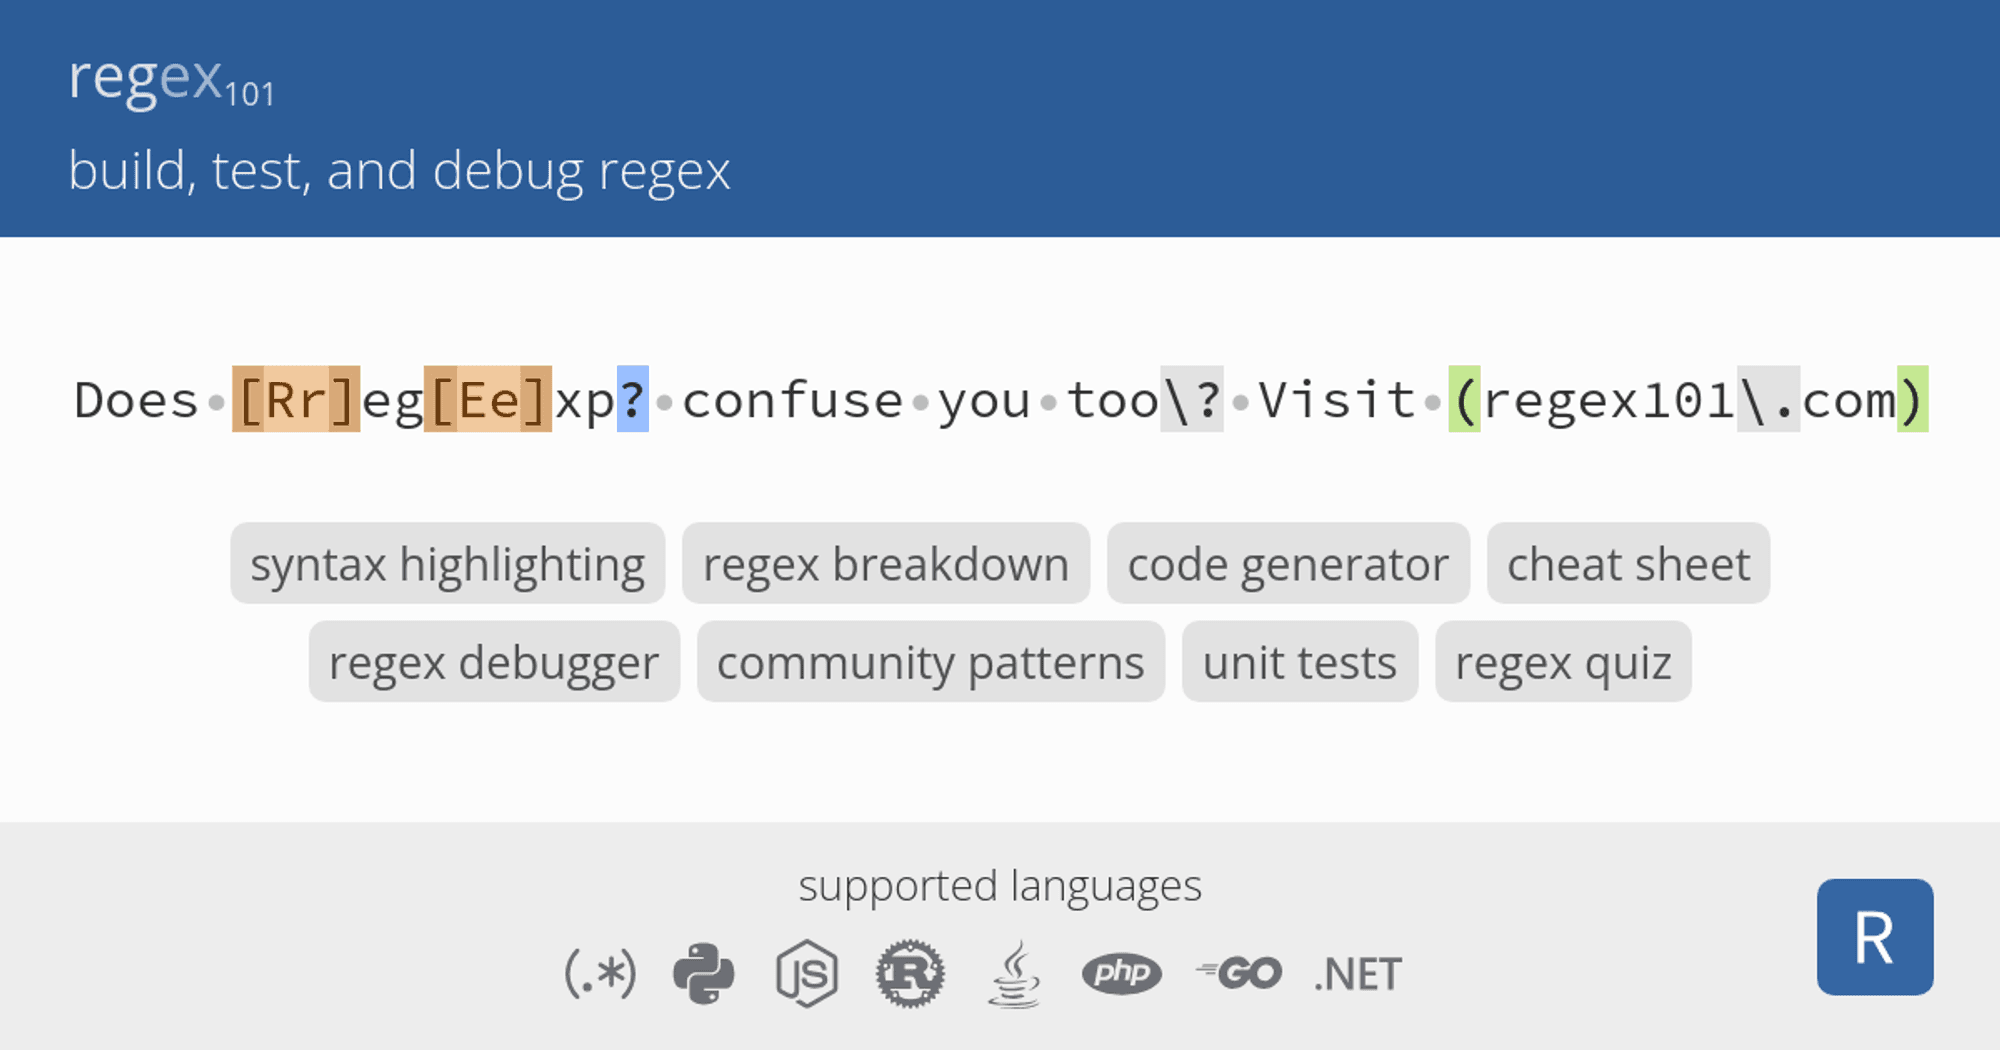 regex101: build, test, and debug regex